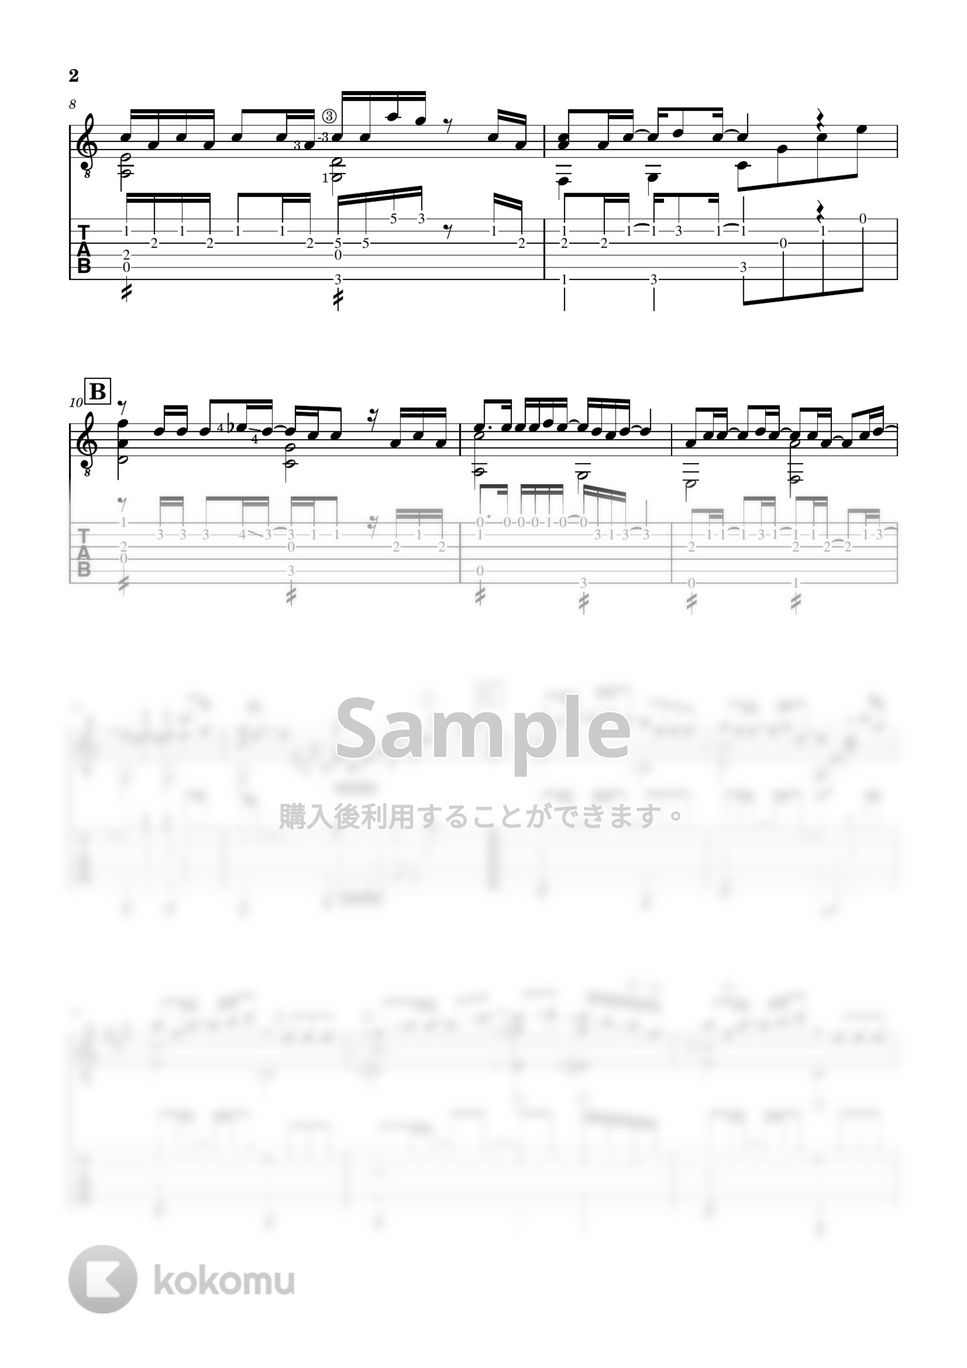 Aimer - 蝶々結び (ギター・ソロ用) by ギタースコア